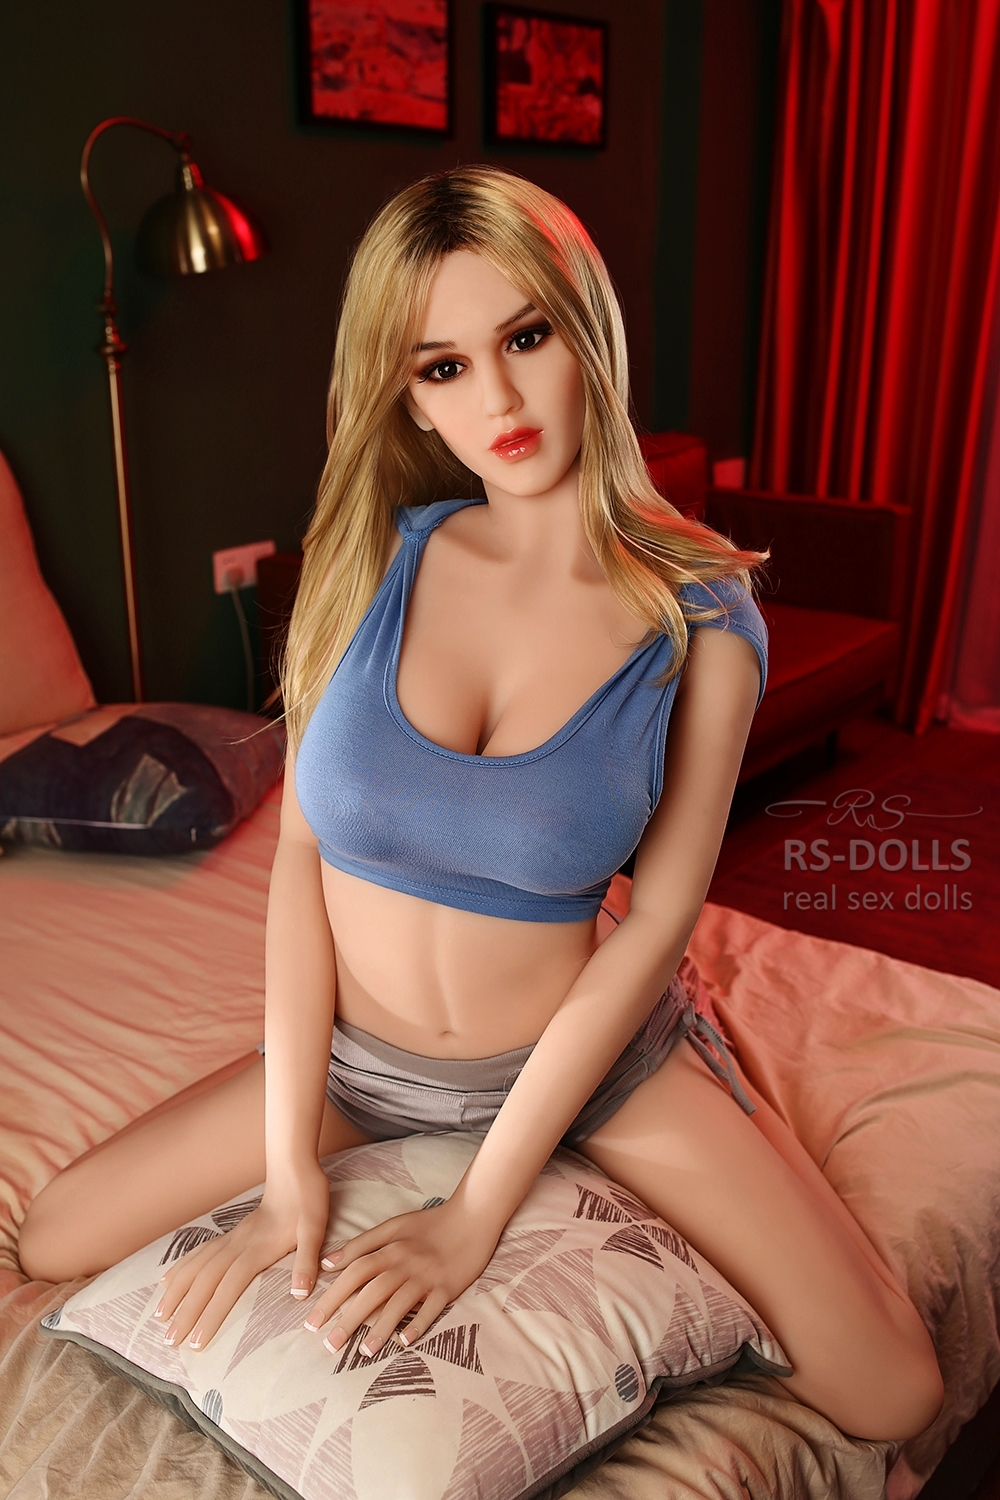 Vanilla RSD PrimeLine real sex doll RS DOLLS Sexpuppen 1